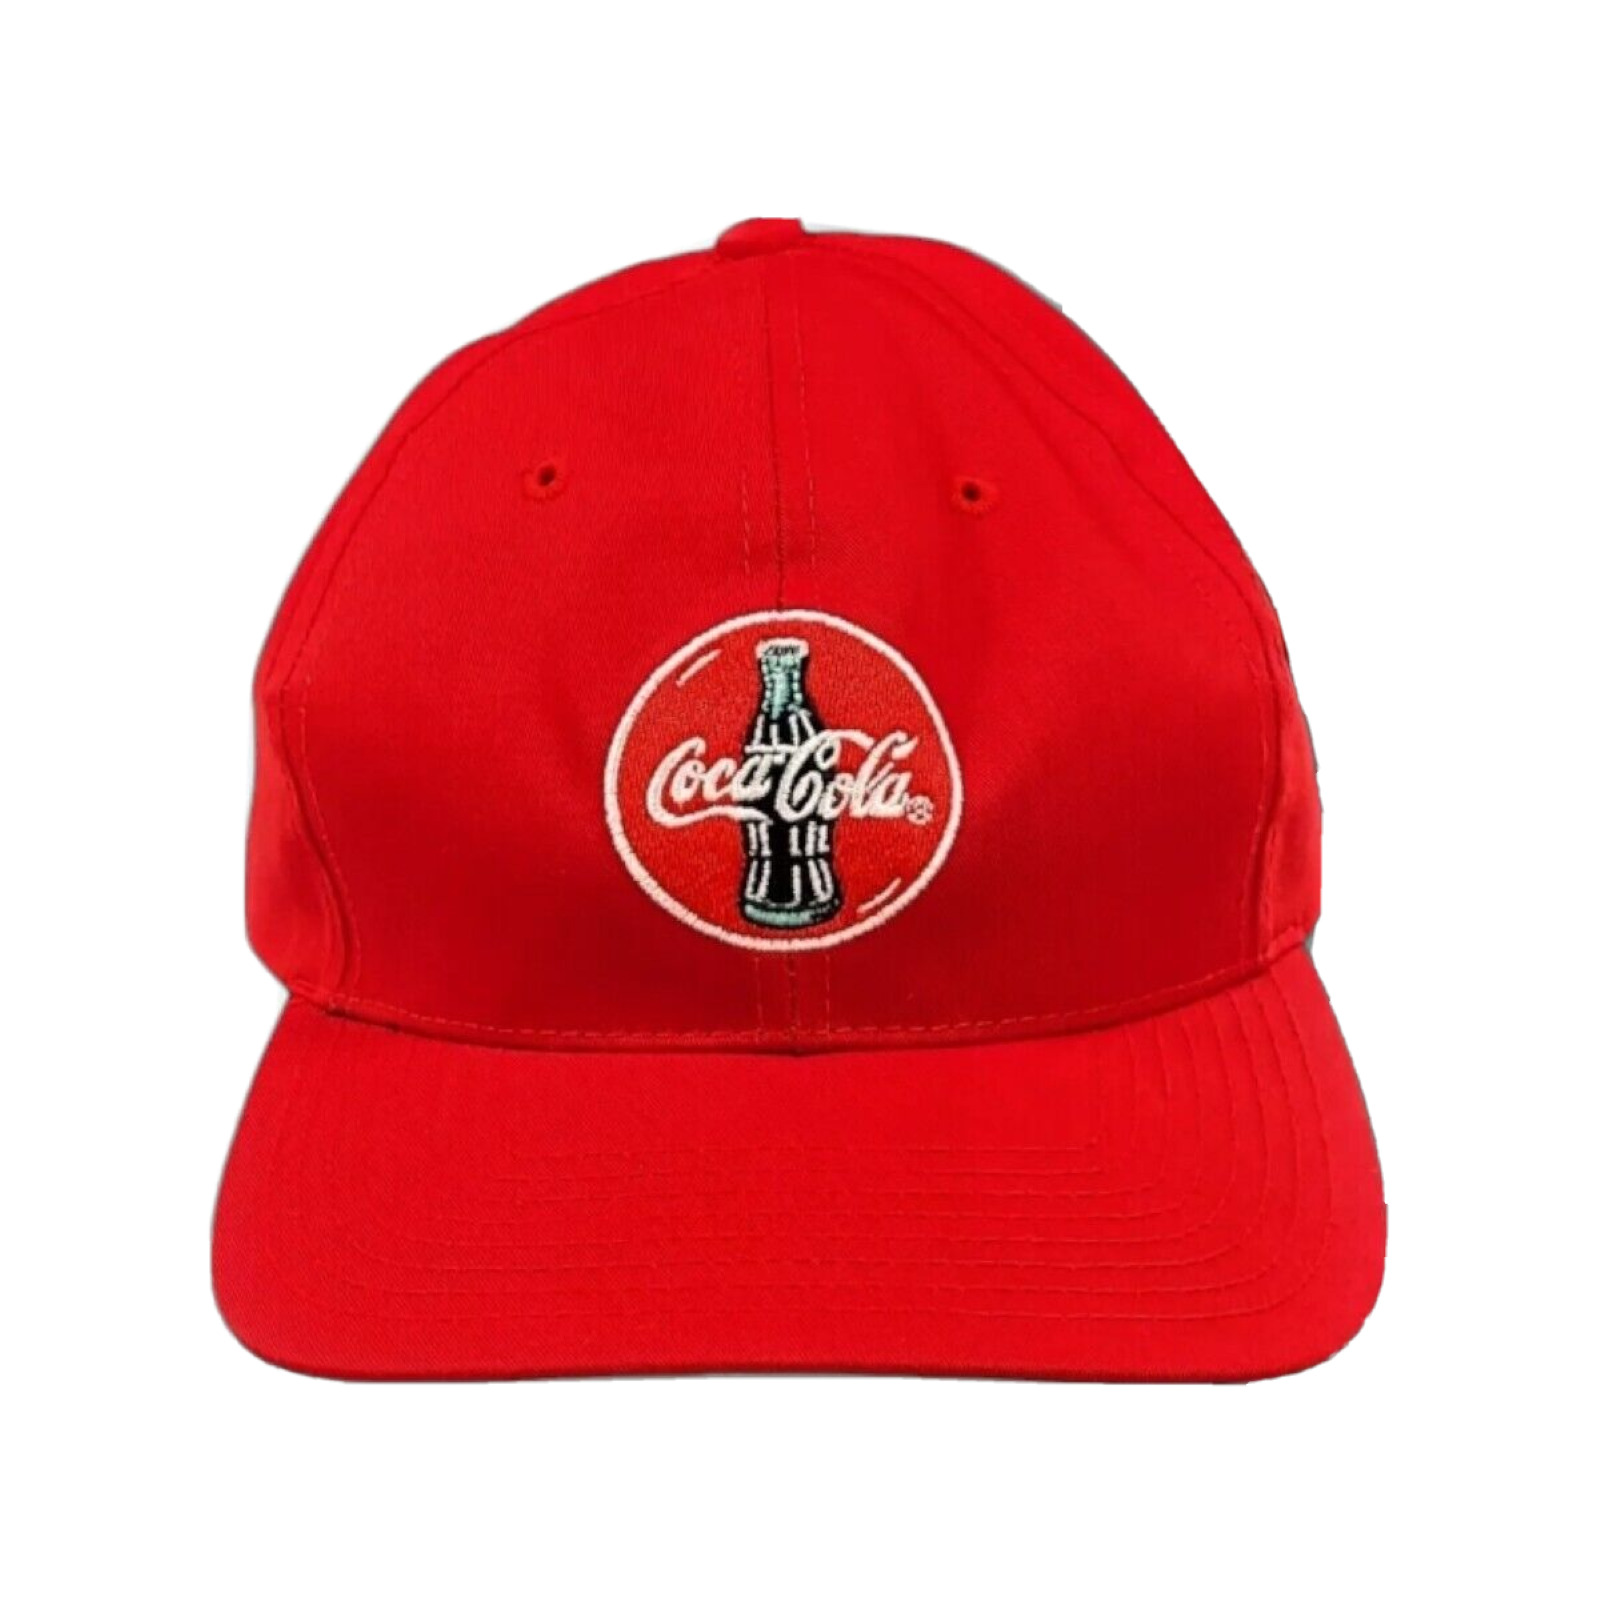 Coca-Cola Embroidered Red Snapback Hat Adjustable Vintage 1997 New Old Stock